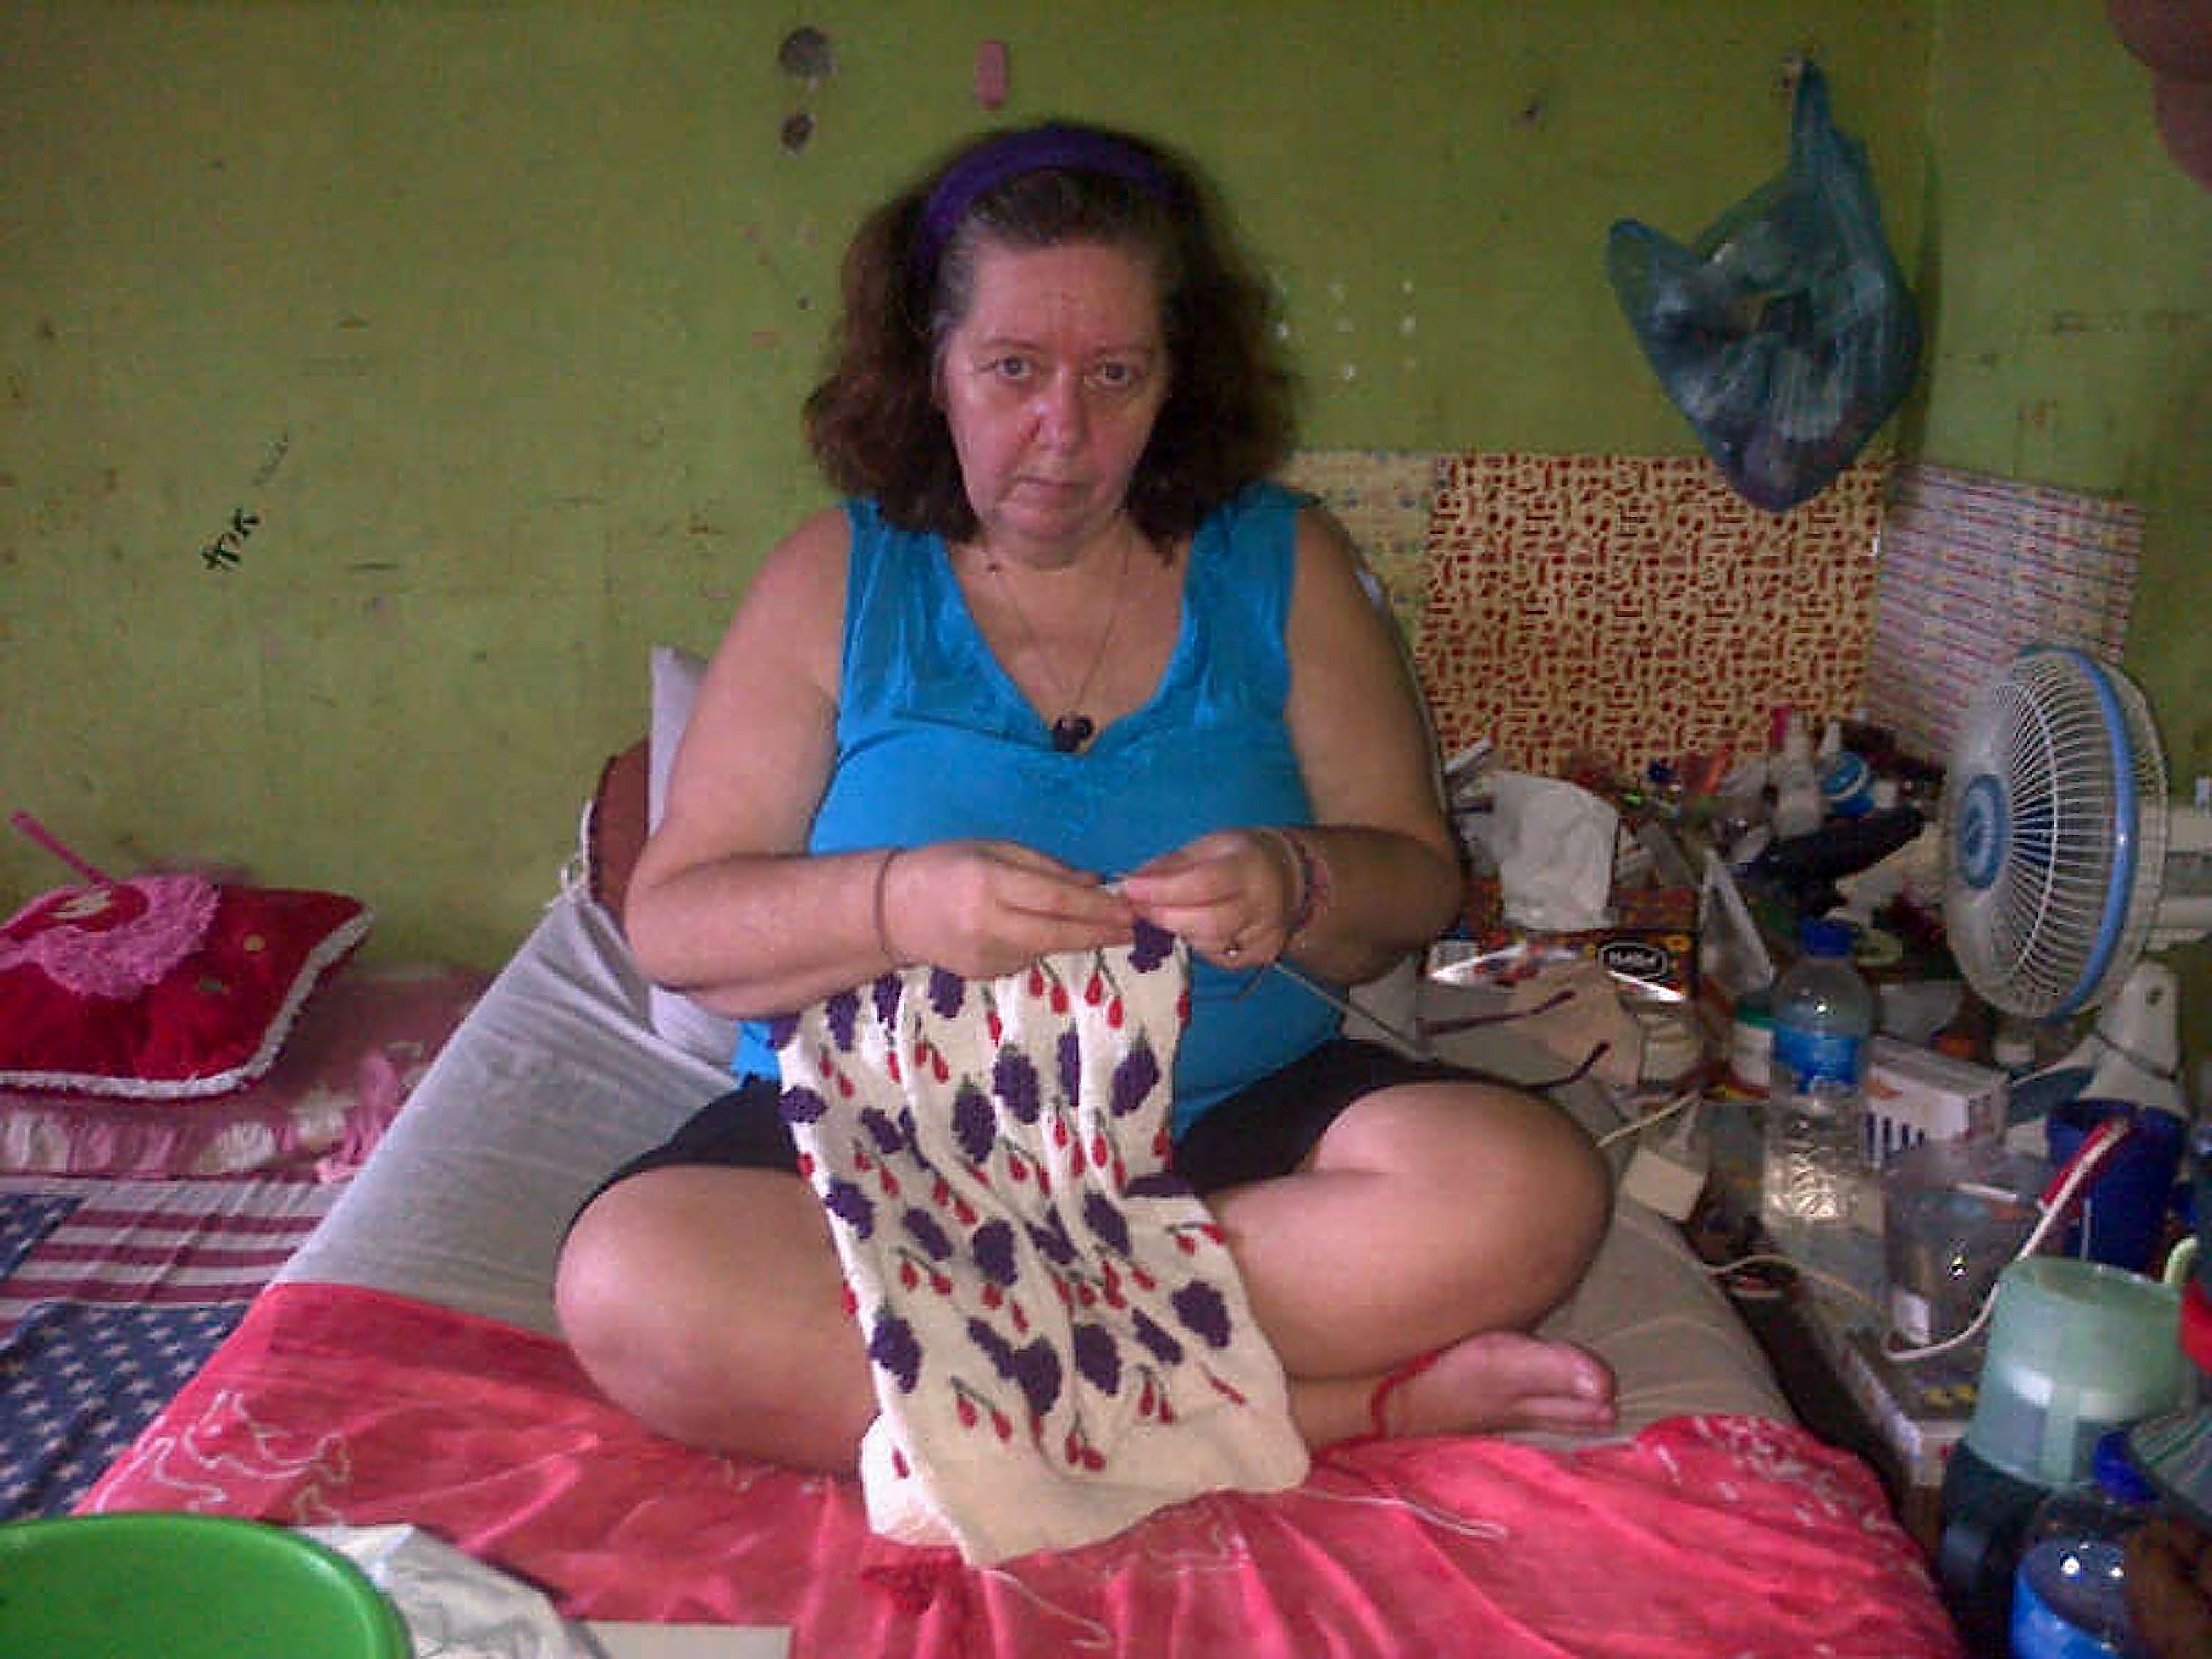 Lindsay Sandiford knitting in Kerobokan prison